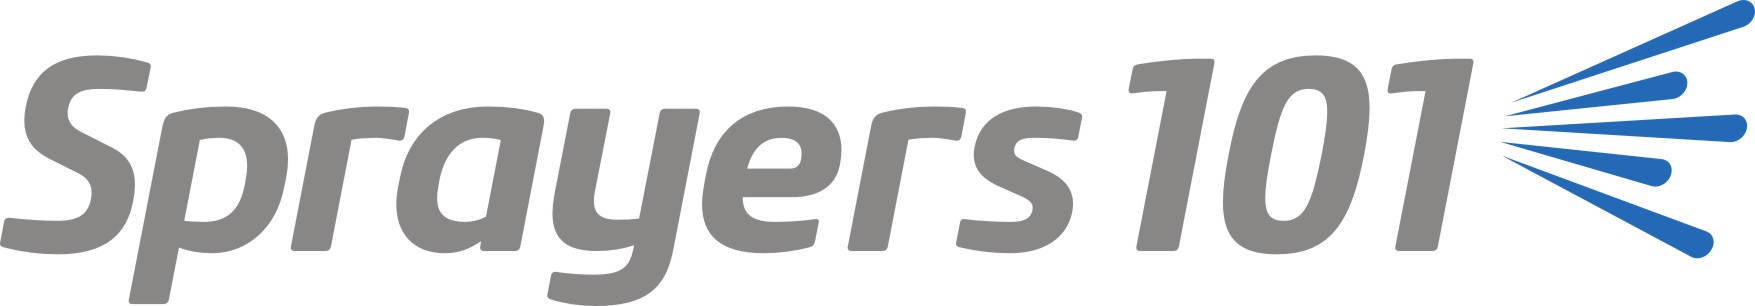 Sprayers 101 logo